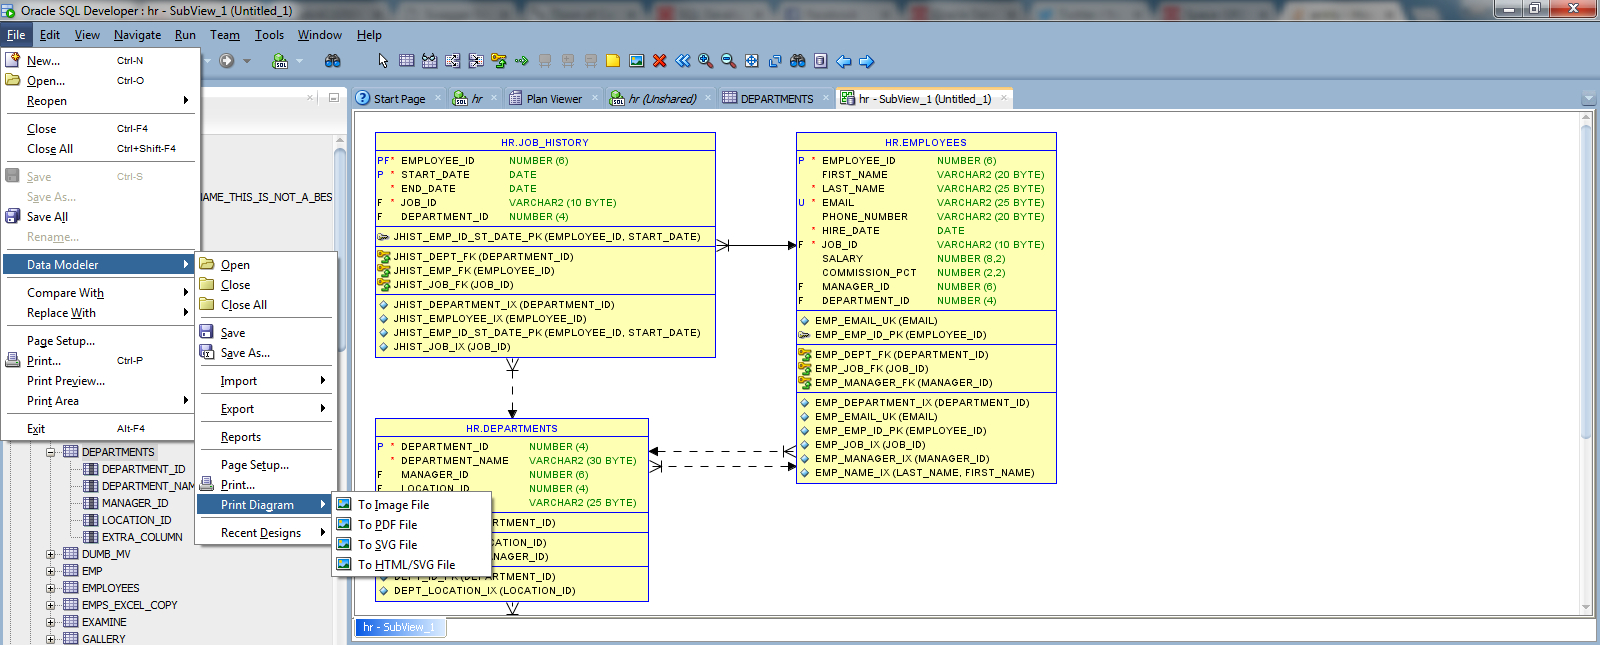 How To Export Erd Diagram To Image In Oracle Data Modeler inside Er Diagram In Sql Developer 4.1